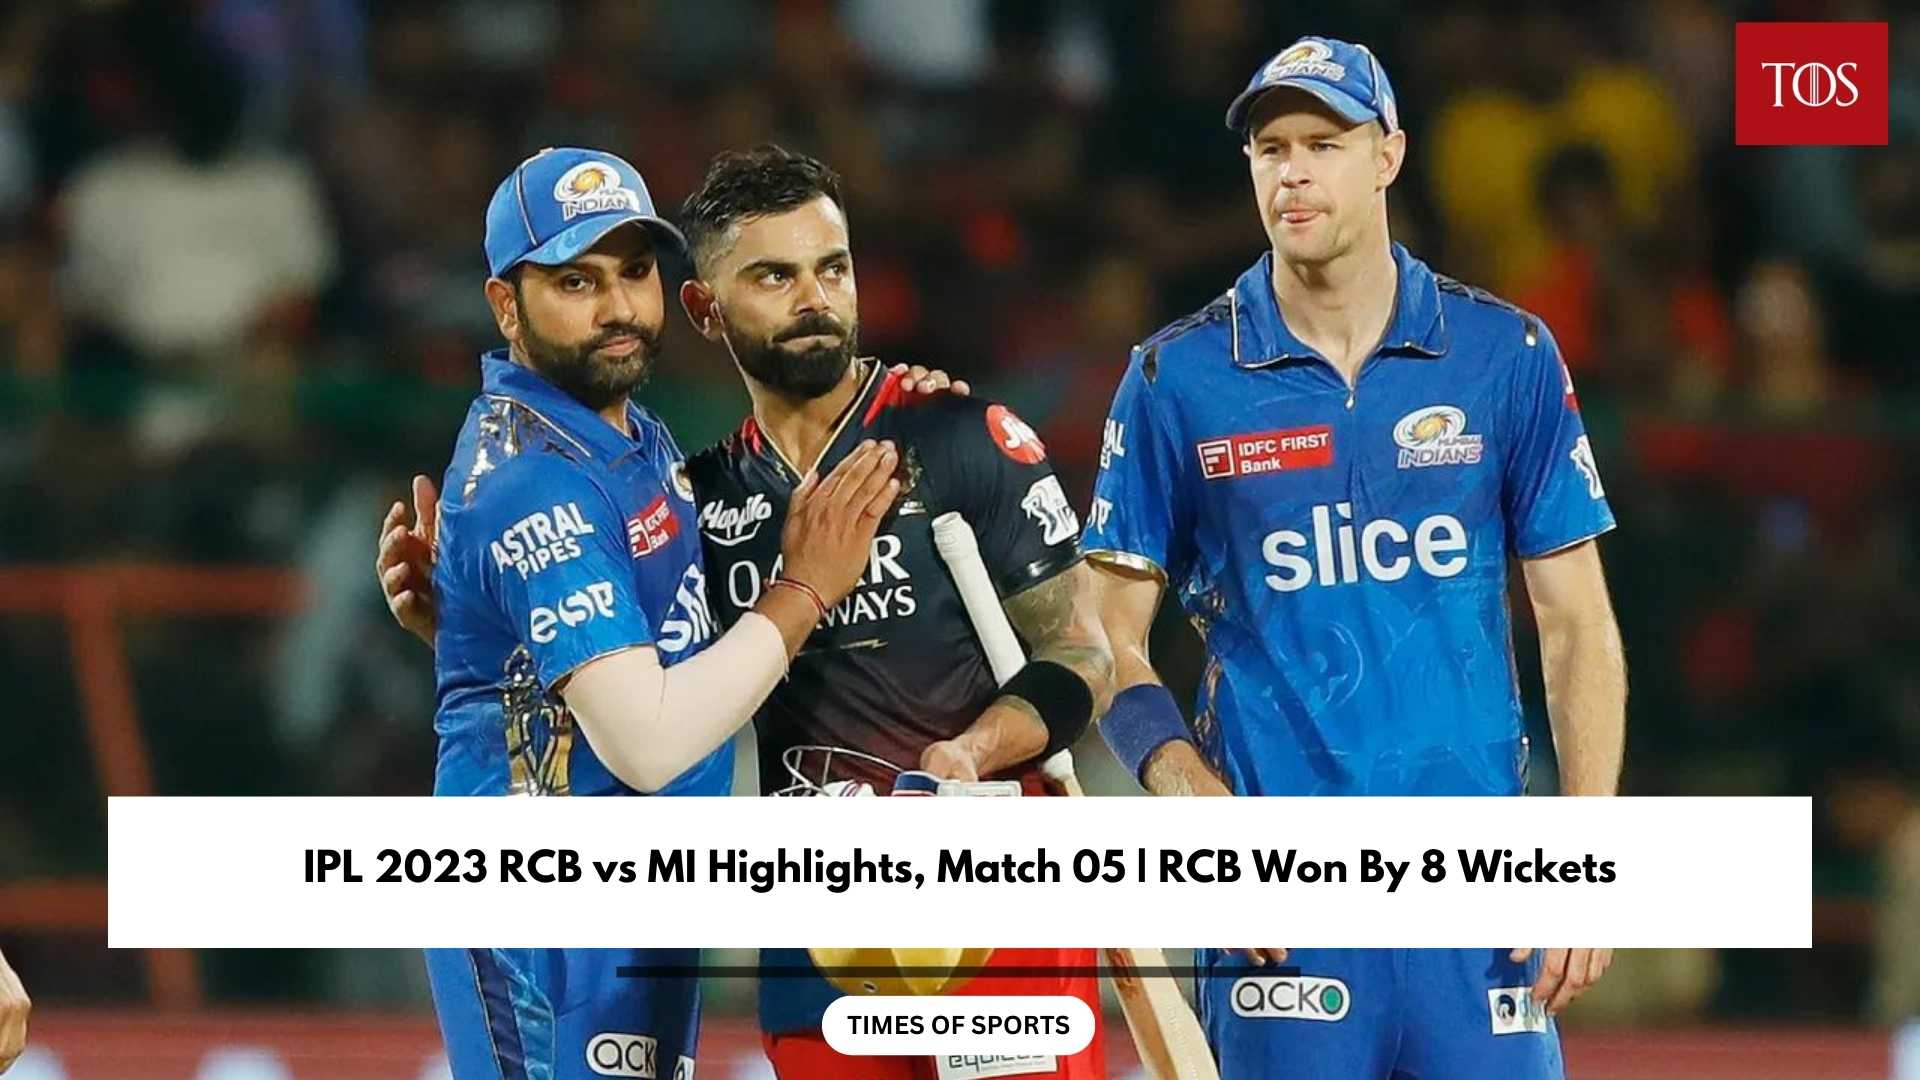 IPL 2023 RCB vs MI Highlights, Match 05 RCB Won By 8 Wickets